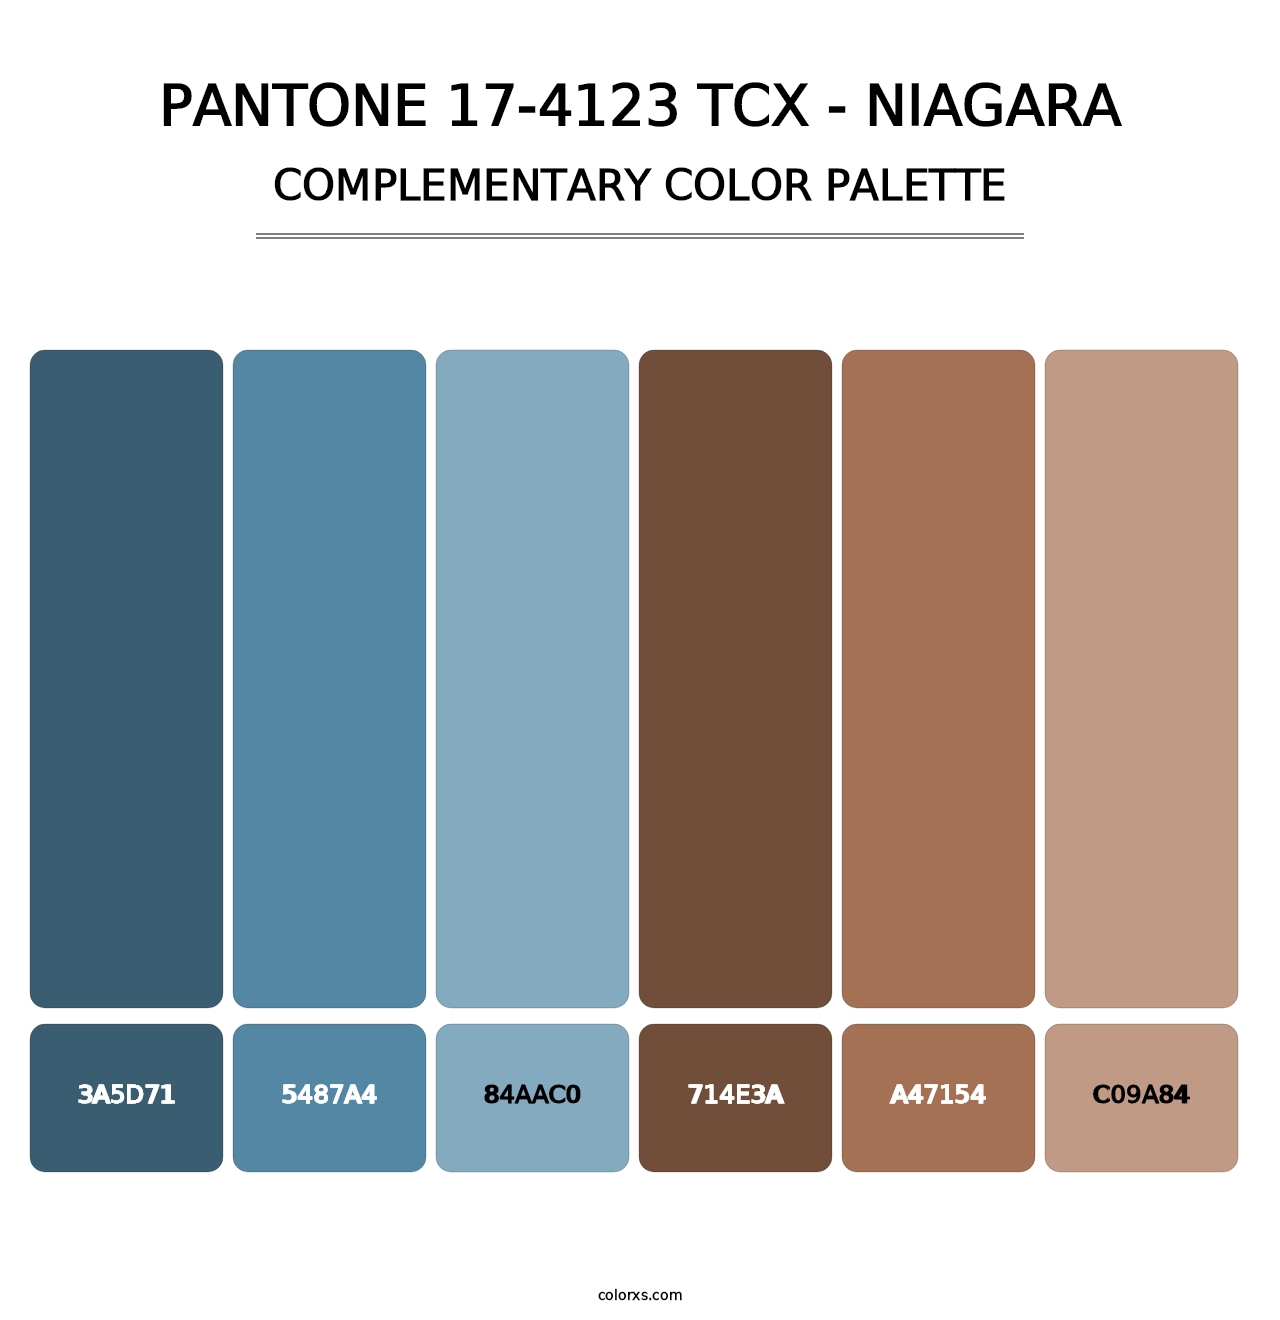 PANTONE 17-4123 TCX - Niagara - Complementary Color Palette